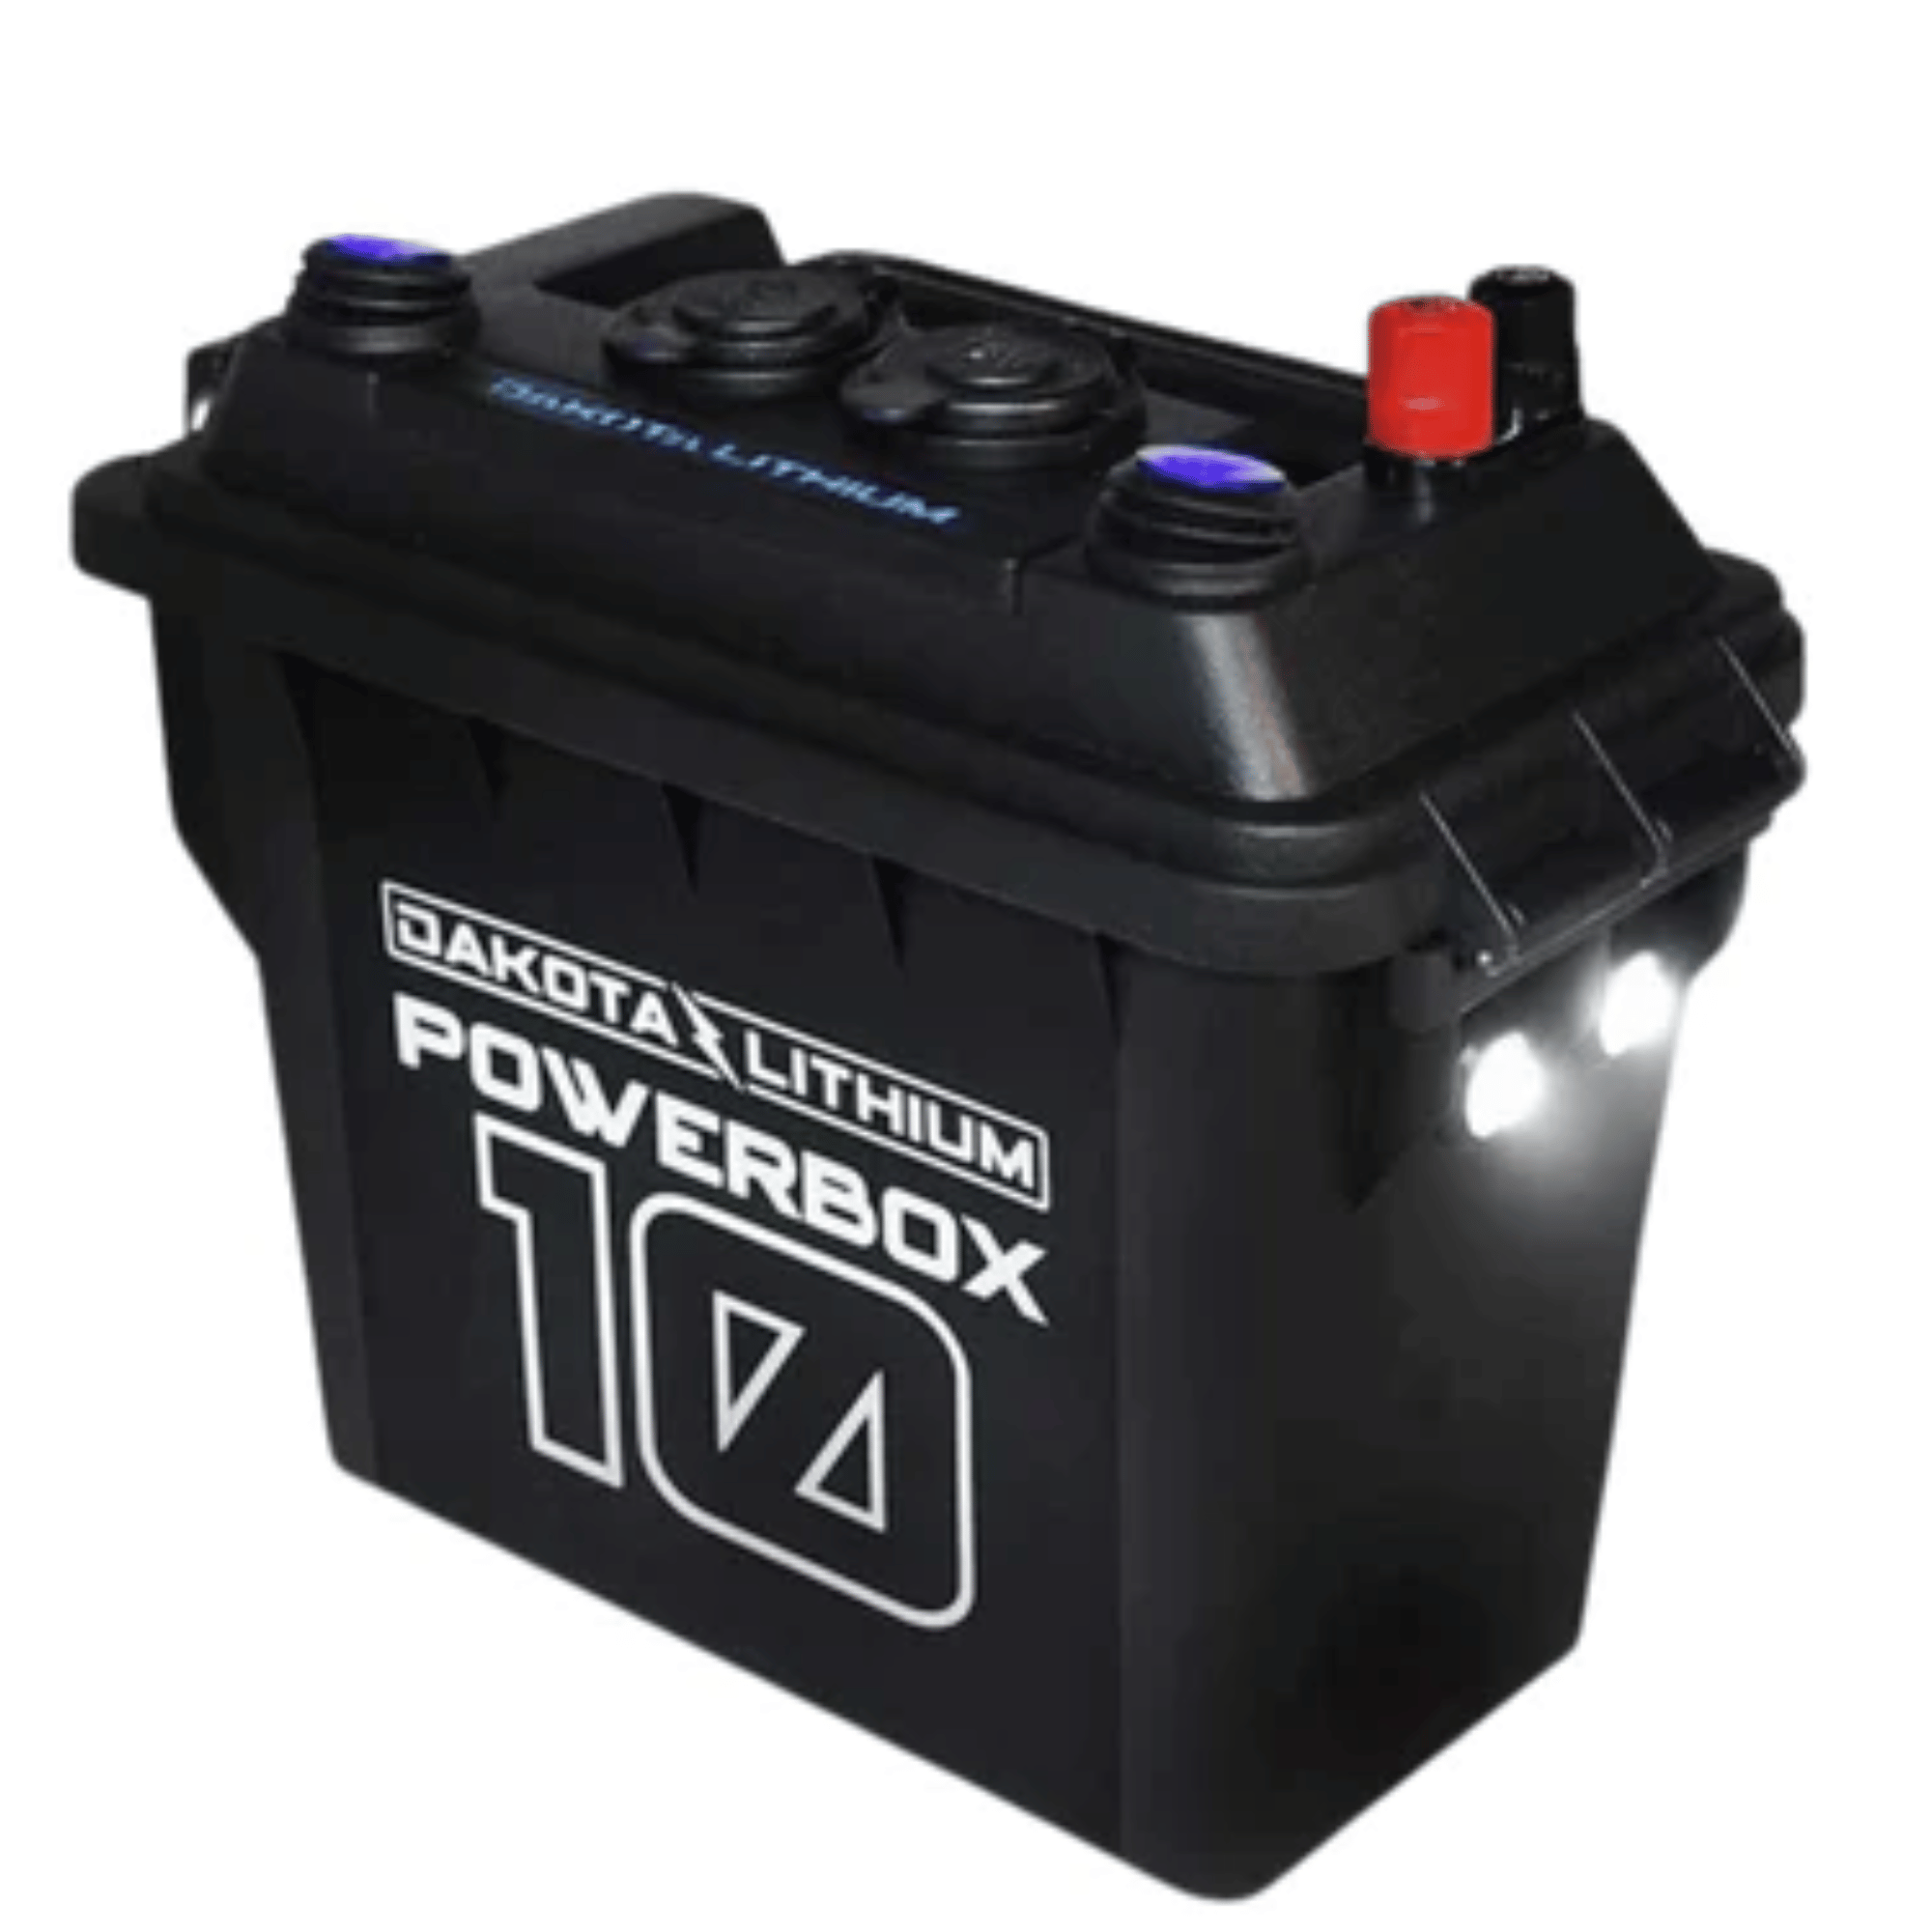 Dakota Lithium Powerbox 10, 12V 10Ah Battery Included